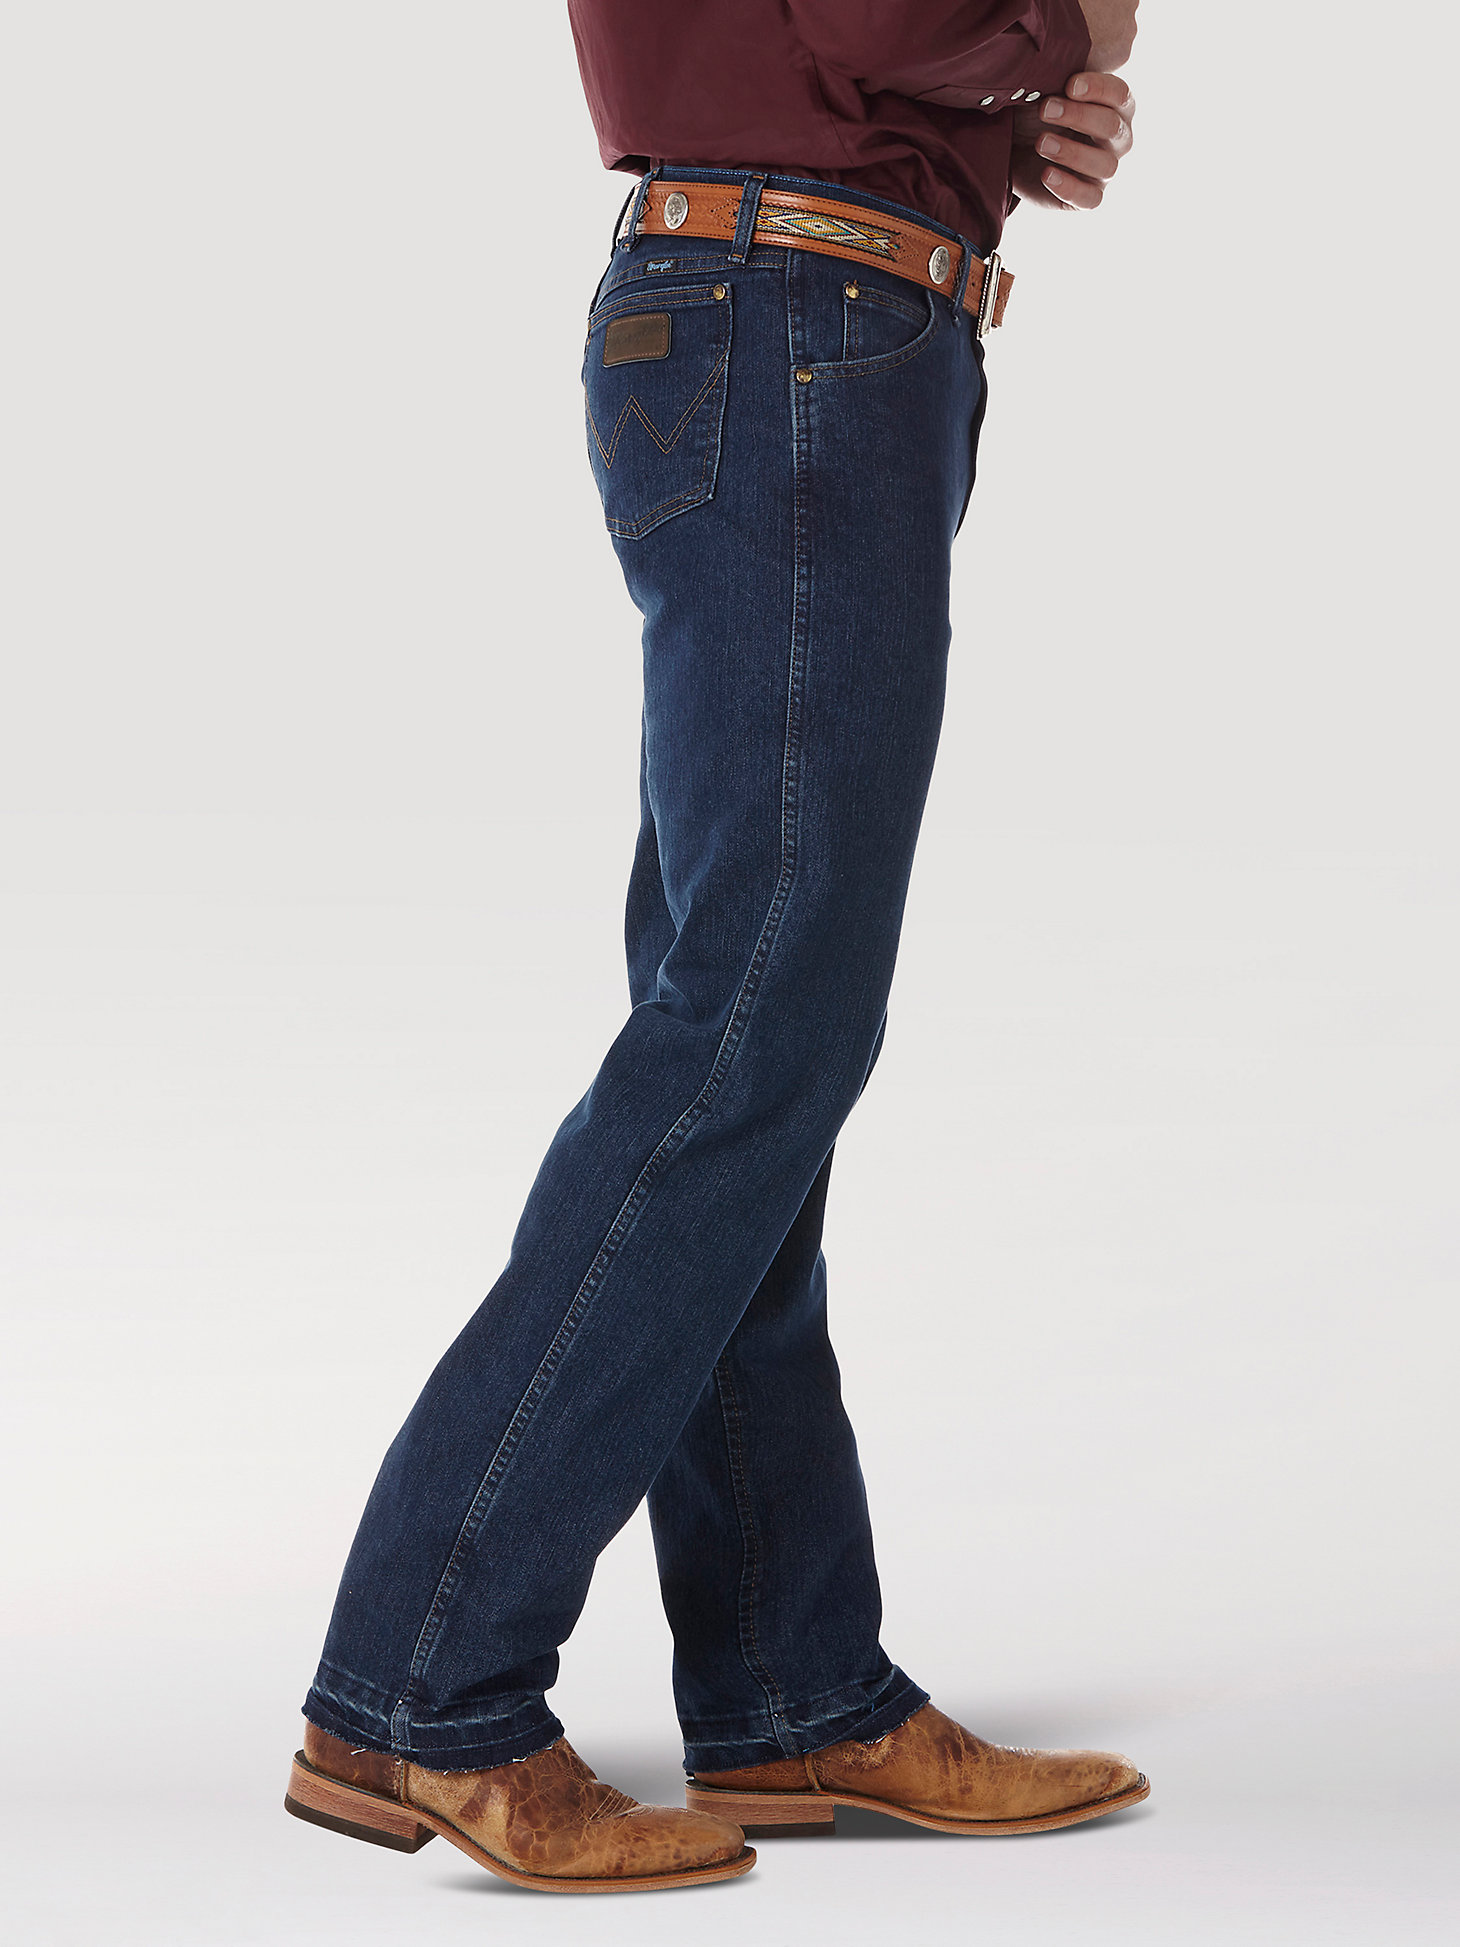 Premium Performance Cowboy Cut® Advanced Comfort Wicking Regular Fit Jean in Midnight Rinse alternative view 1